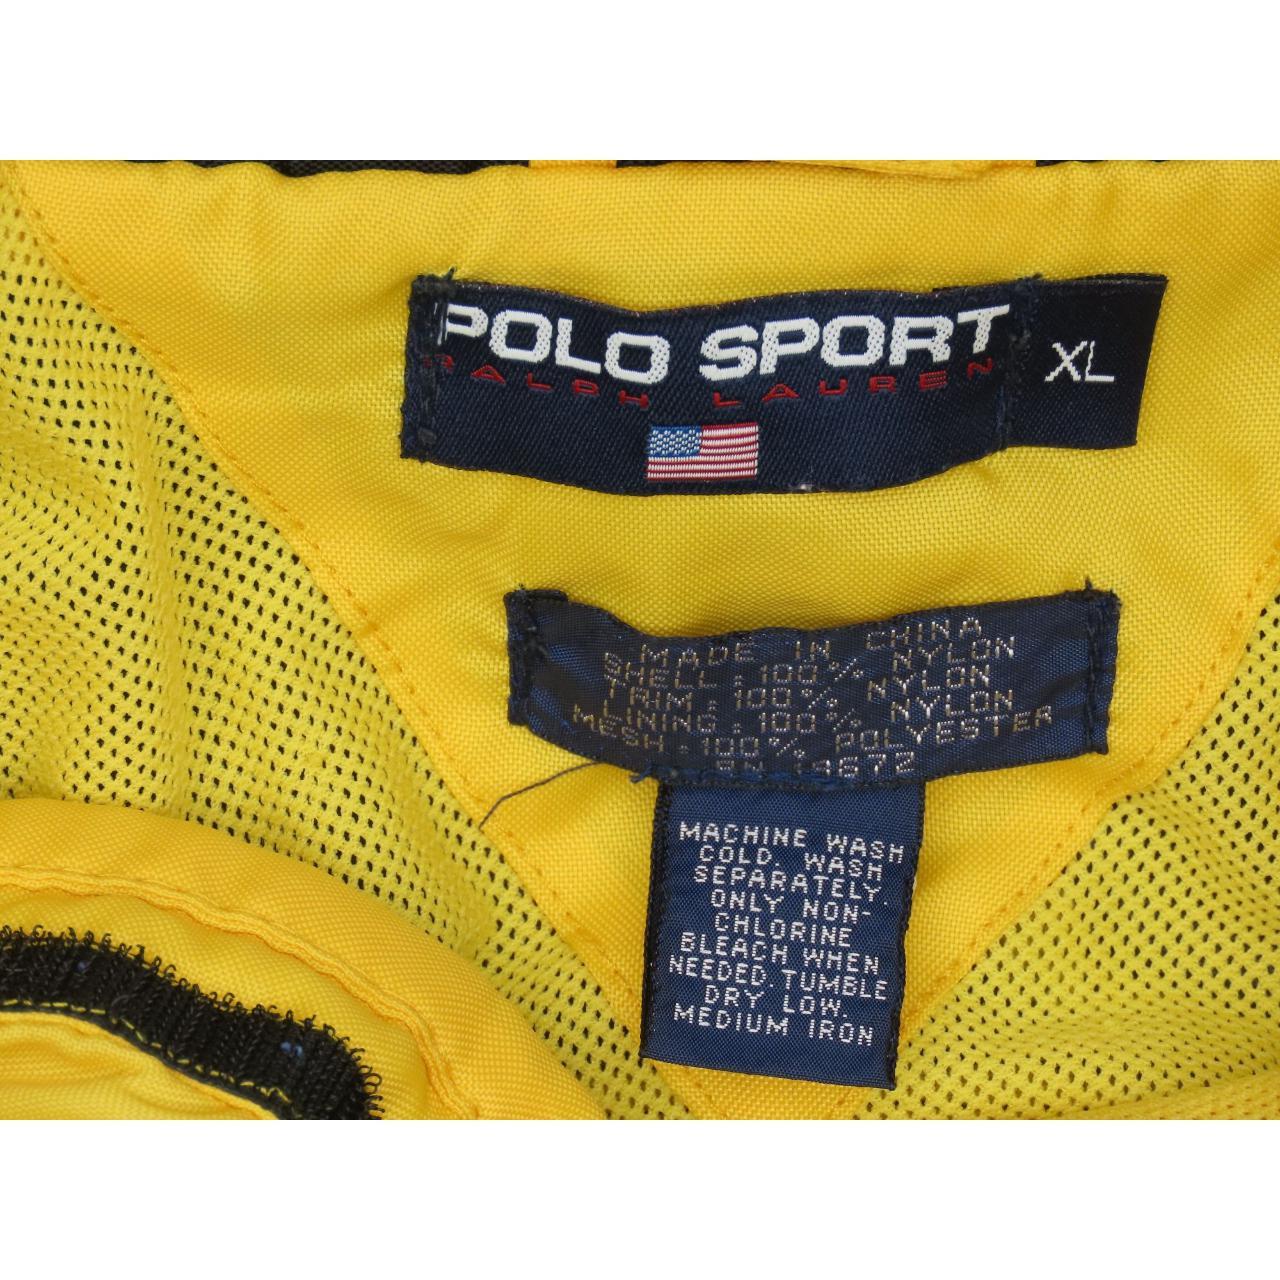 1990s Vintage Polo Sport Jacket Size... - Depop